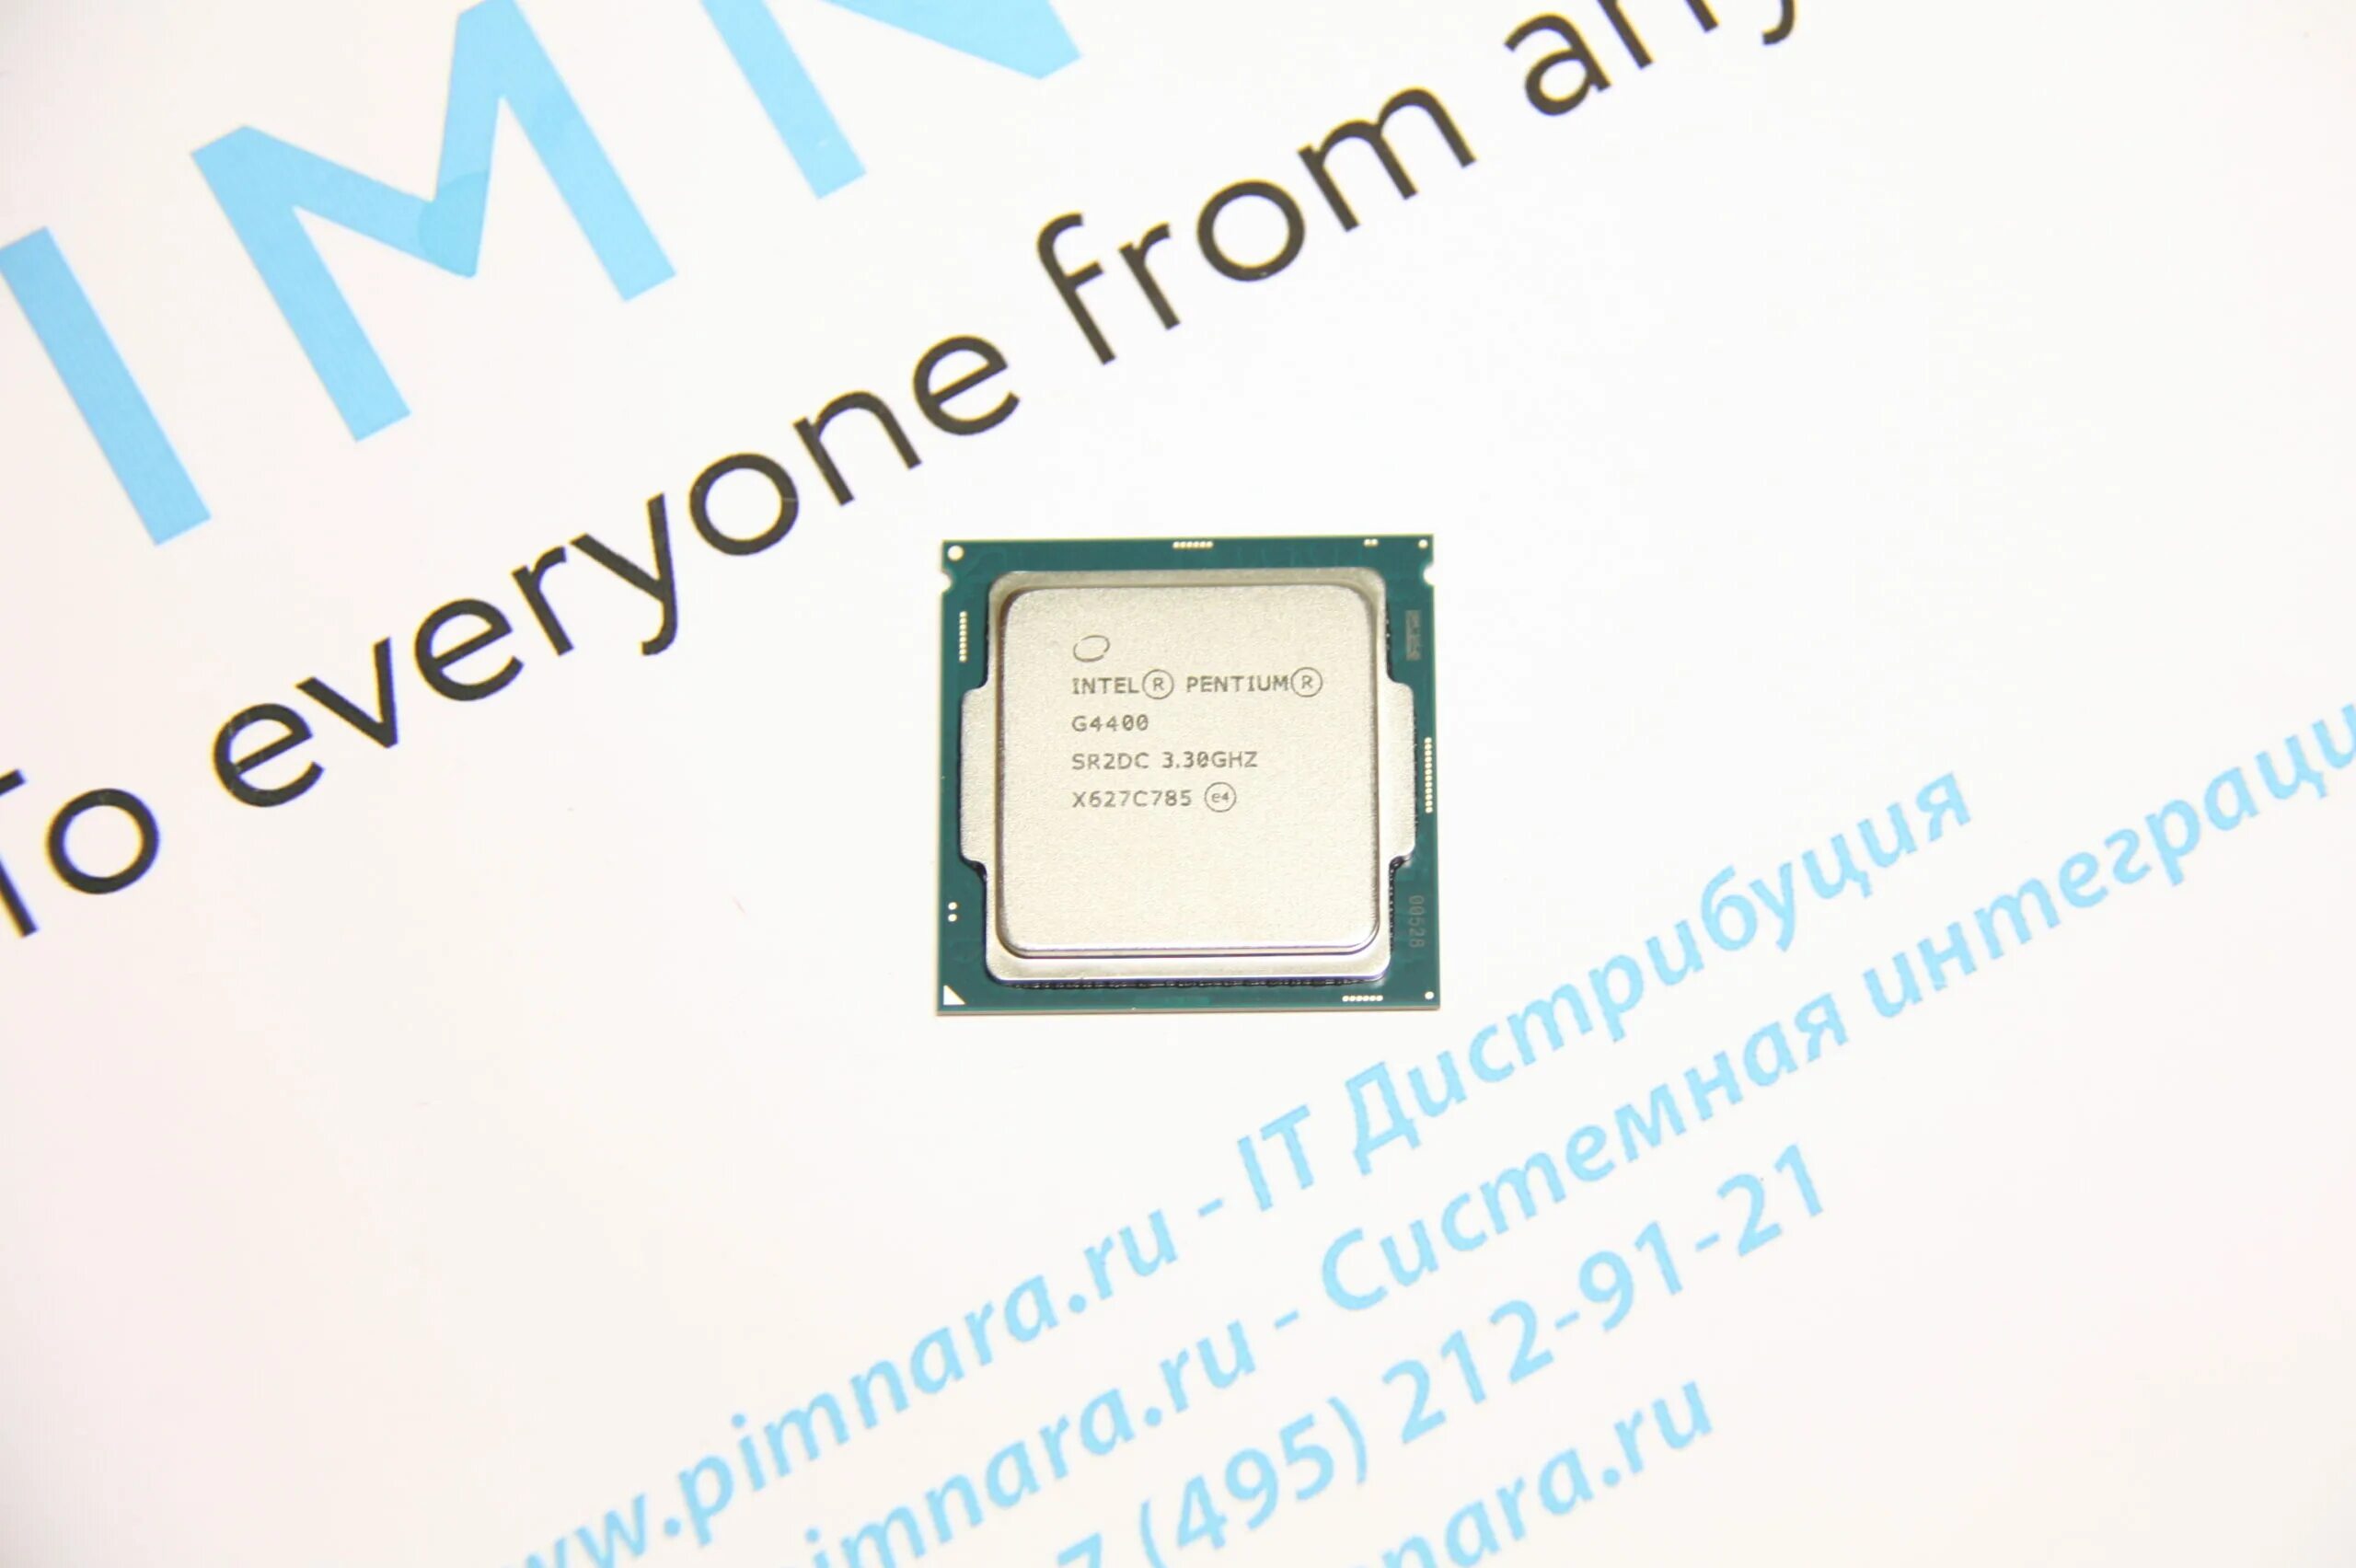 4400 3. Процессор Intel Pentium g4400 OEM. Intel Pentium g4400 3.3GHZ. Intel Pentium g4400 lga1151, 2 x 3300 МГЦ. Intel Pentium g4400 3.3GHZ характеристики.